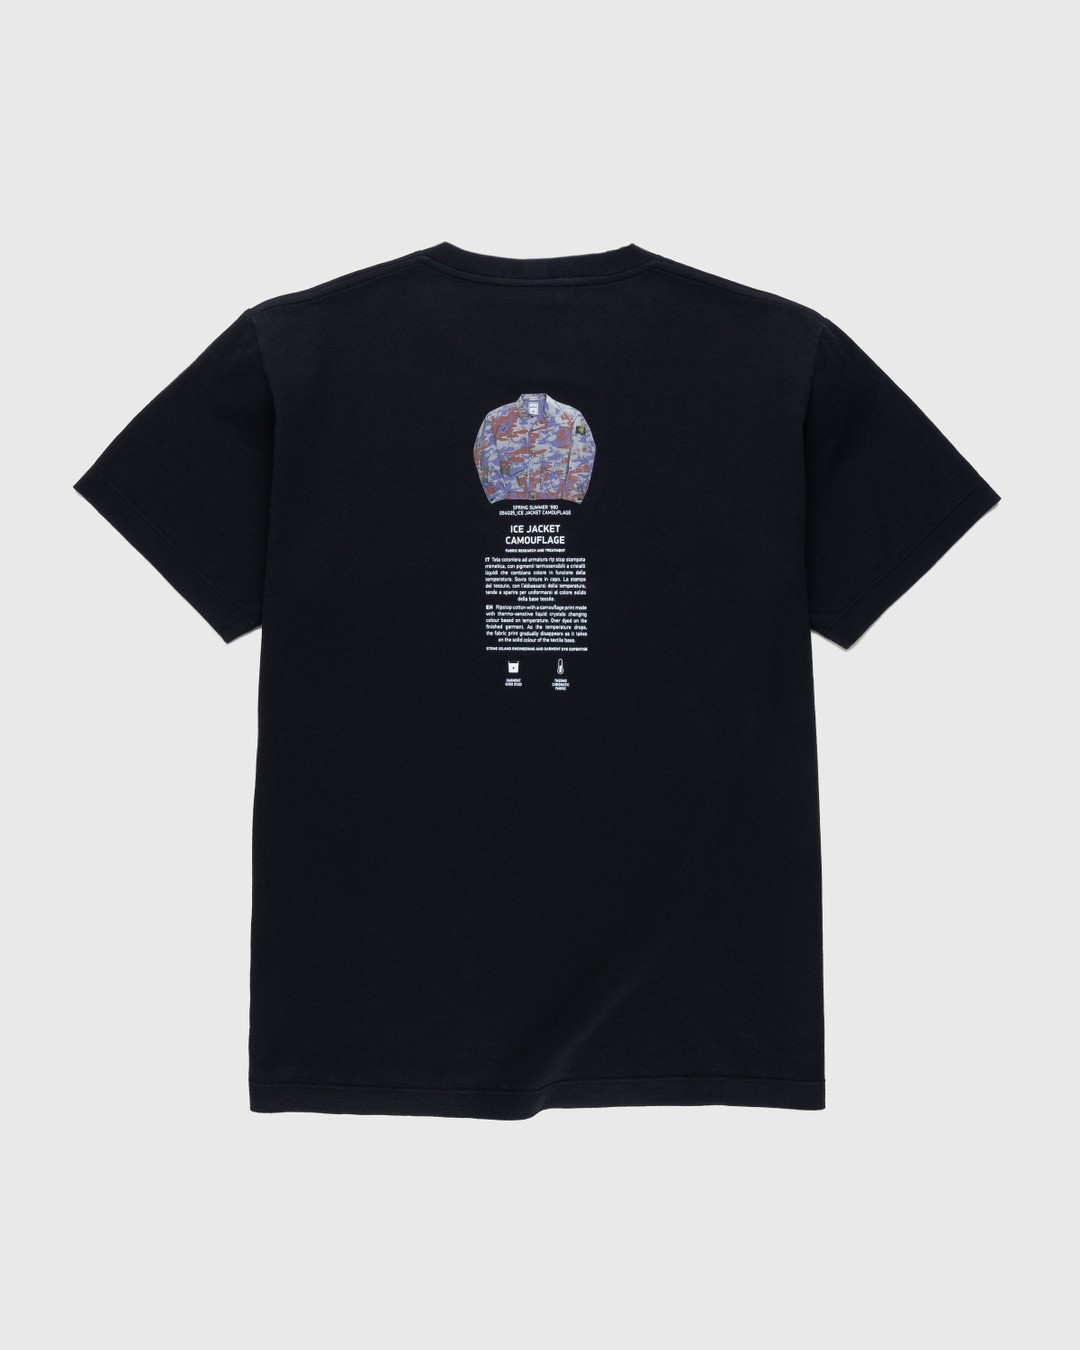 Stone Island – Archivio T-Shirt Black - T-Shirts - Black - Image 2